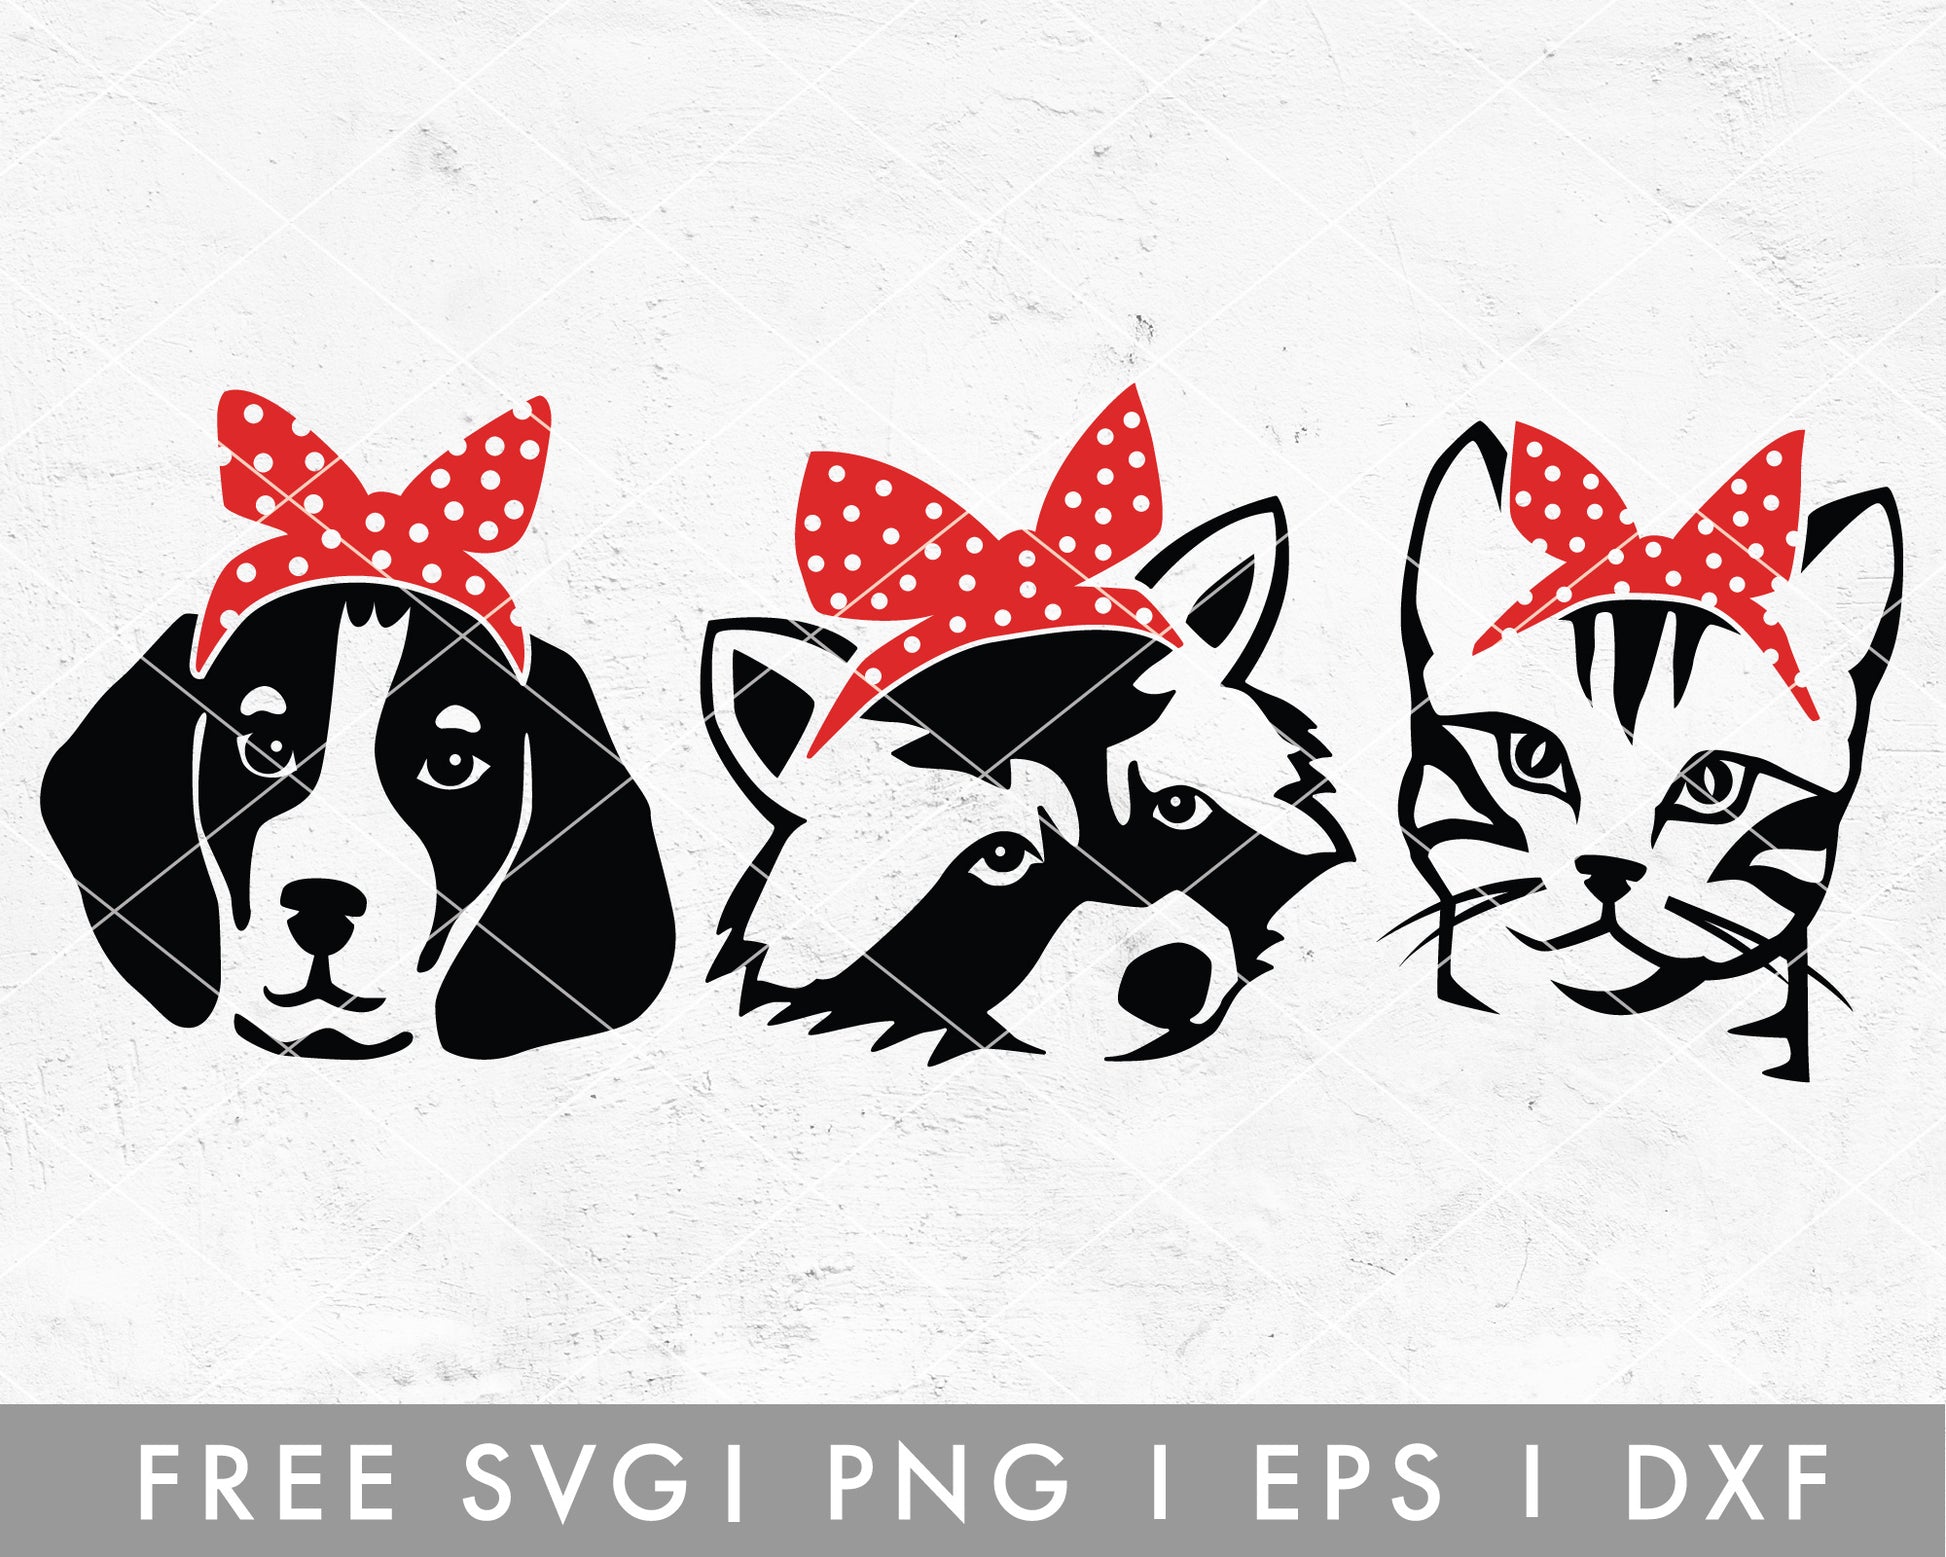 FREE FREE Animal Face SVG | Heifer SVG Cut File for Cricut, Cameo Silhouette | Free SVG Cut File